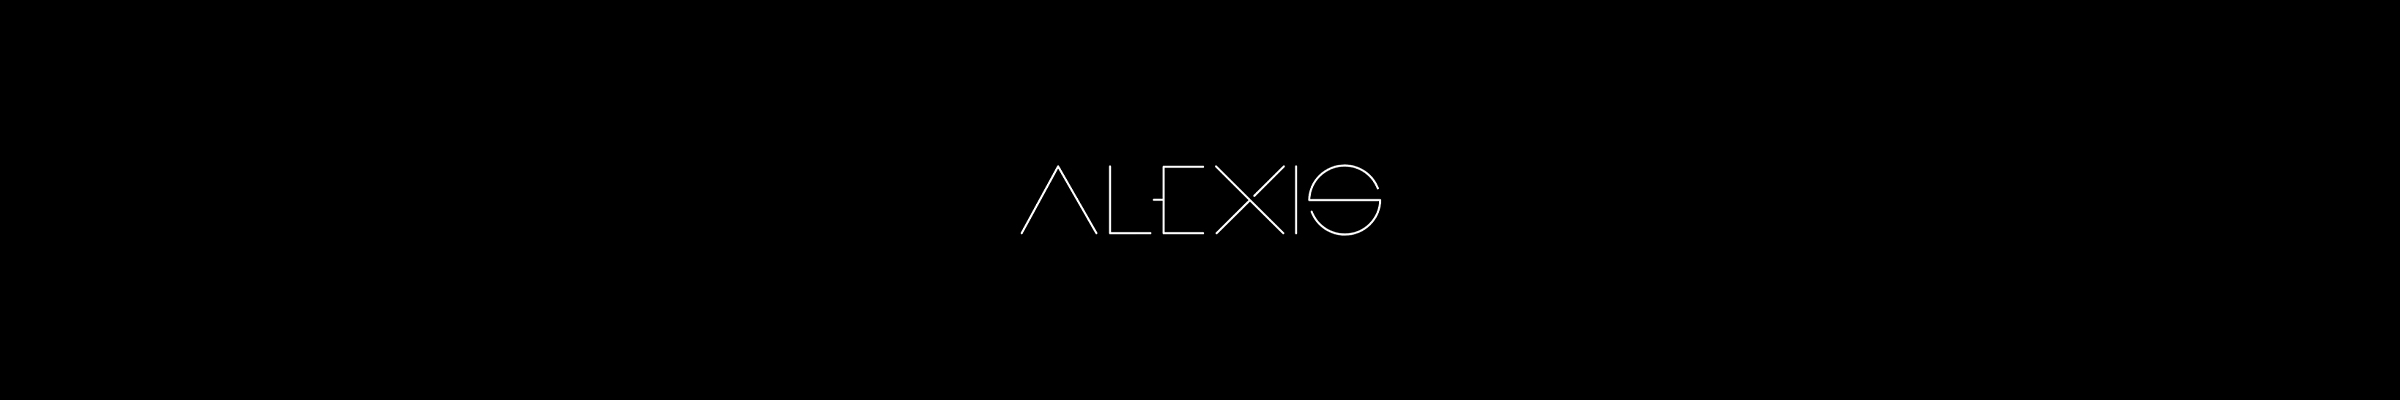 alexis-banner